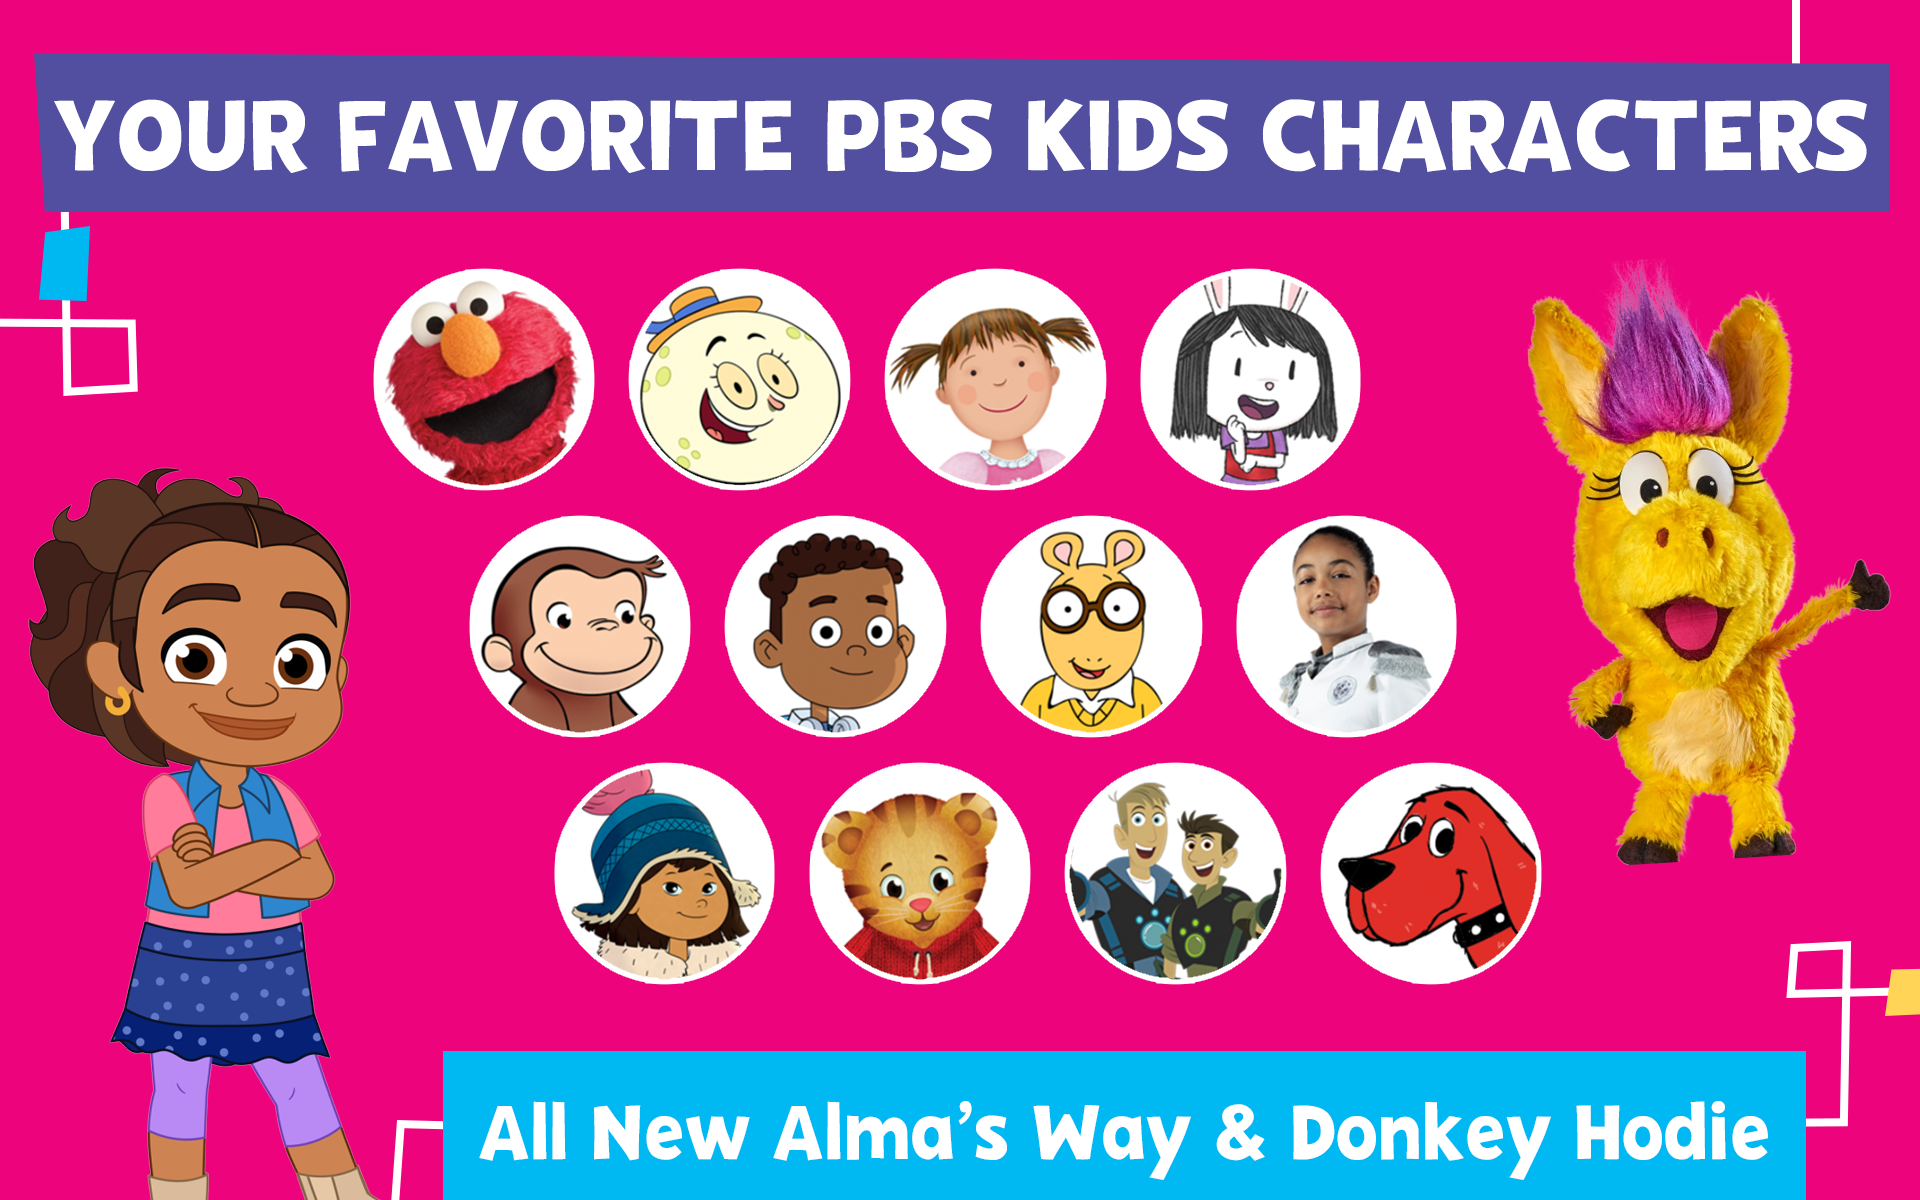 PBS KIDS Games Mobile Downloads